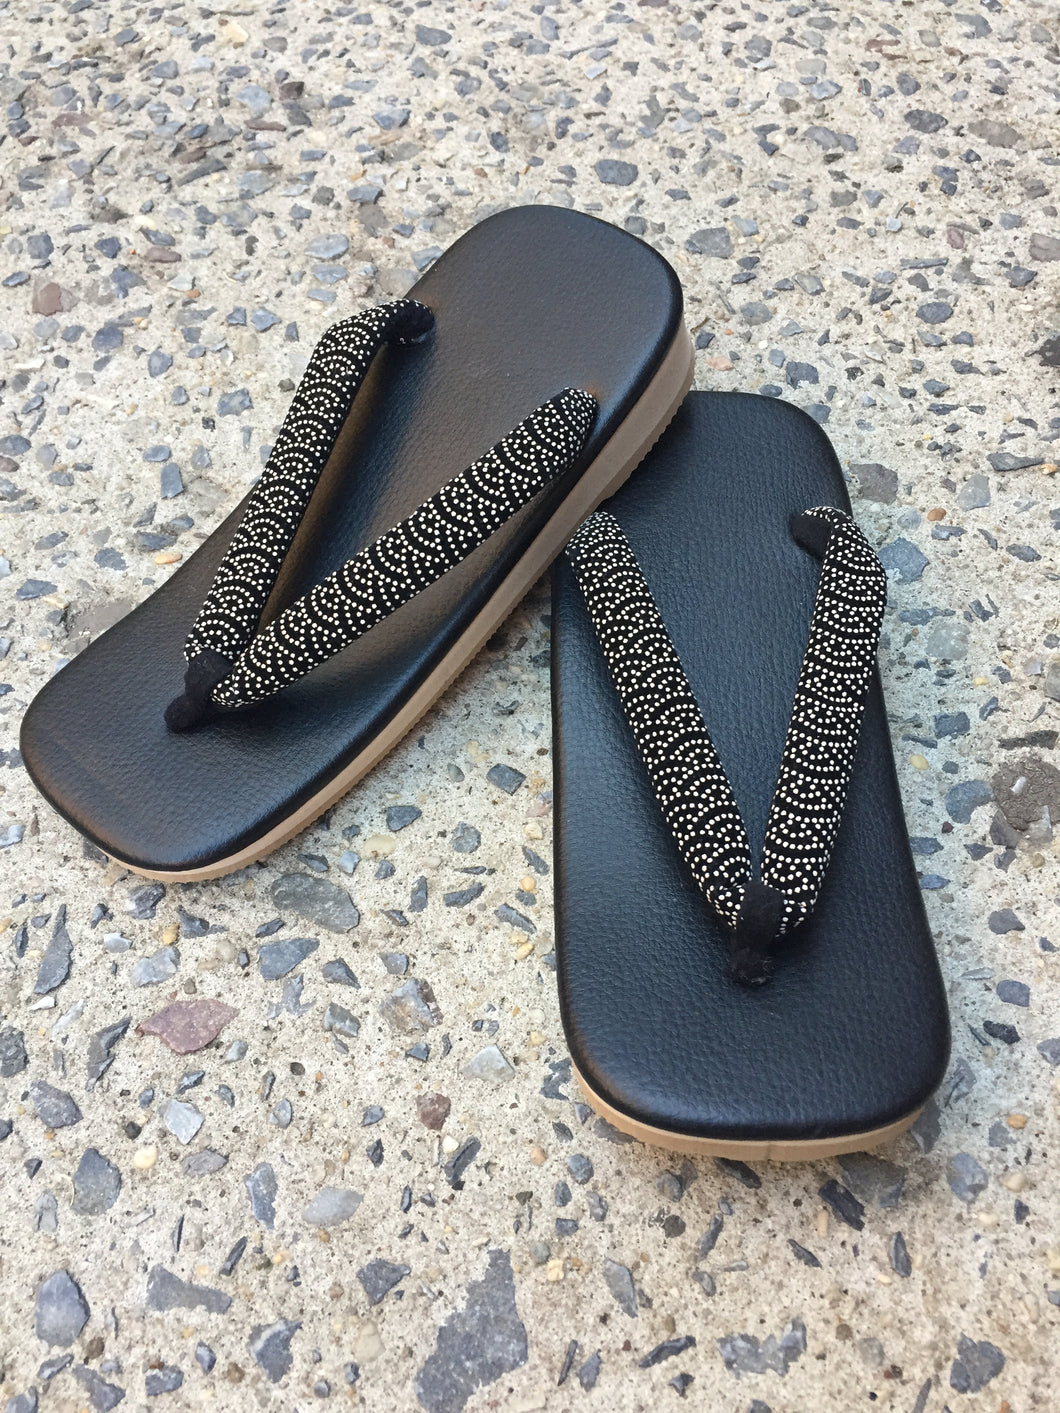 Zori Sandals - Faux Leather/Memory Foam - Black Geometric Designs